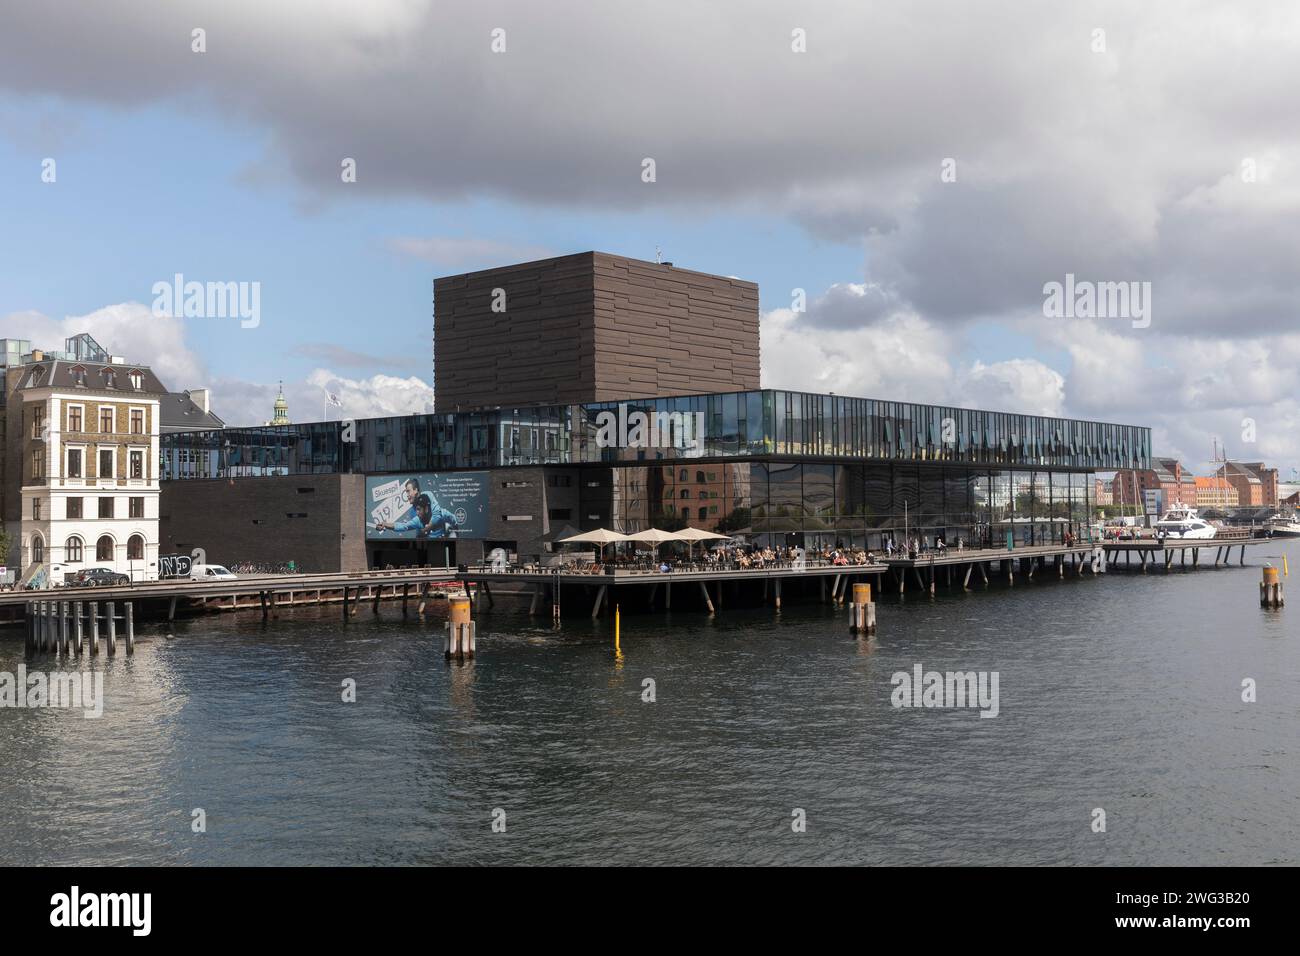 Copenhagen, architettura moderna: Il teatro Skuespilhuset degli architetti Boje Lundgaard e Lene Tranberg. Foto Stock